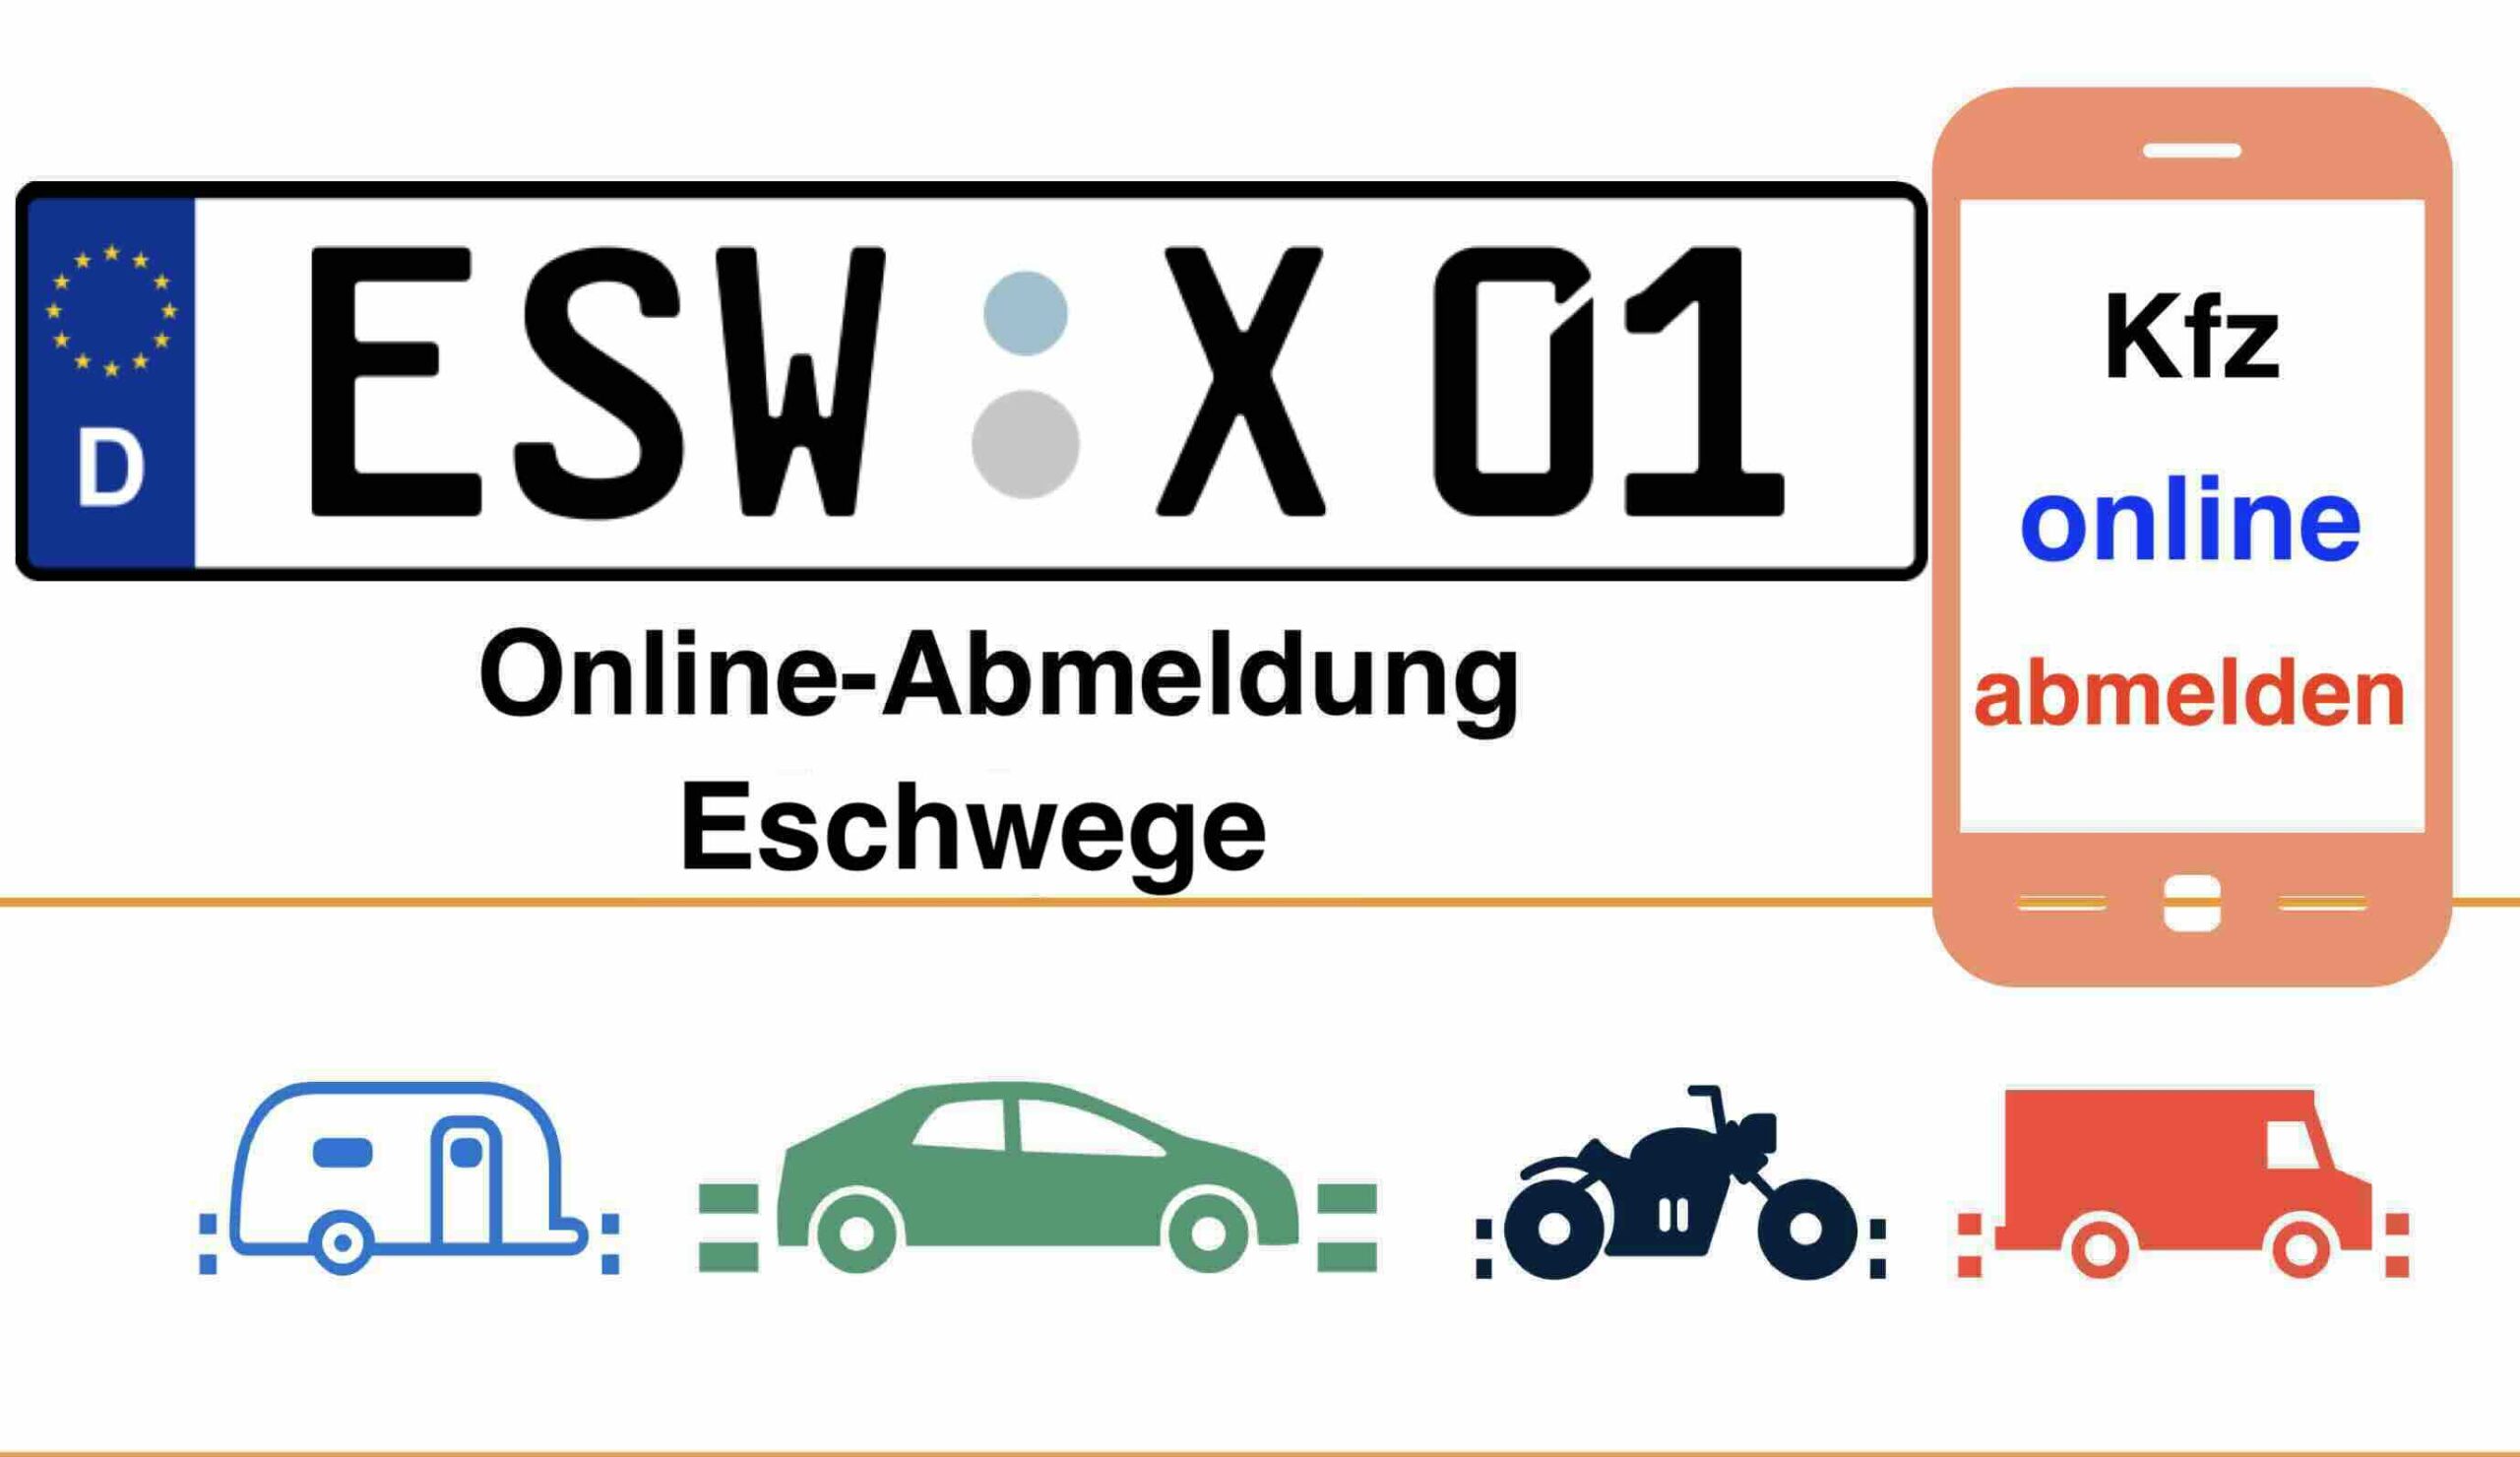 Online-Abmeldung in Eschwege 